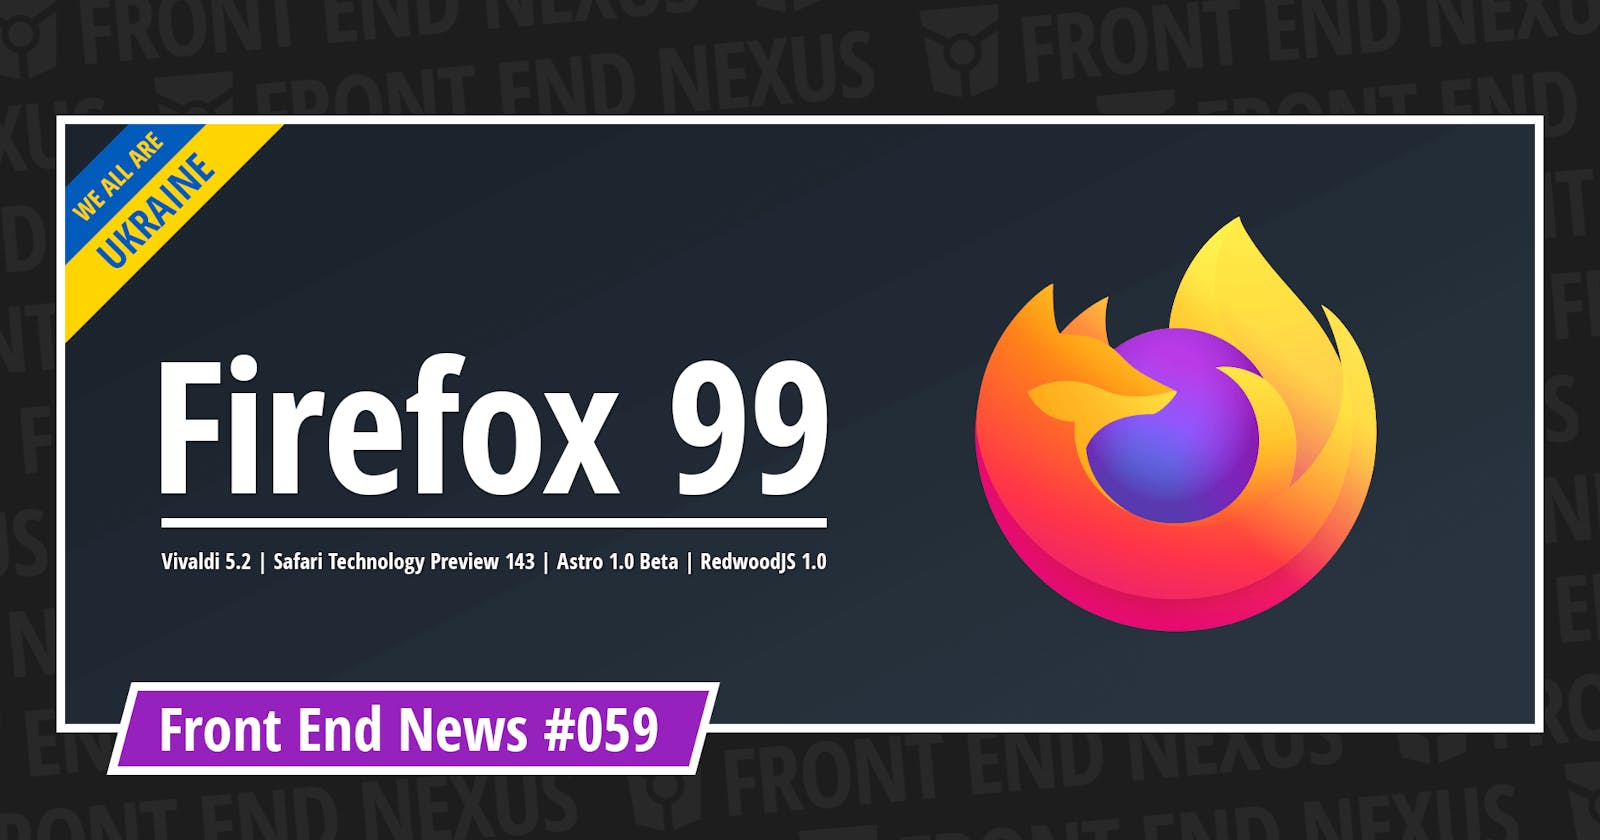 Firefox 99, Vivaldi 5.2, Safari Technology Preview 143, Astro 1.0 Beta, Node v17.9.0, RedwoodJS 1.0, and more | Front End News #059